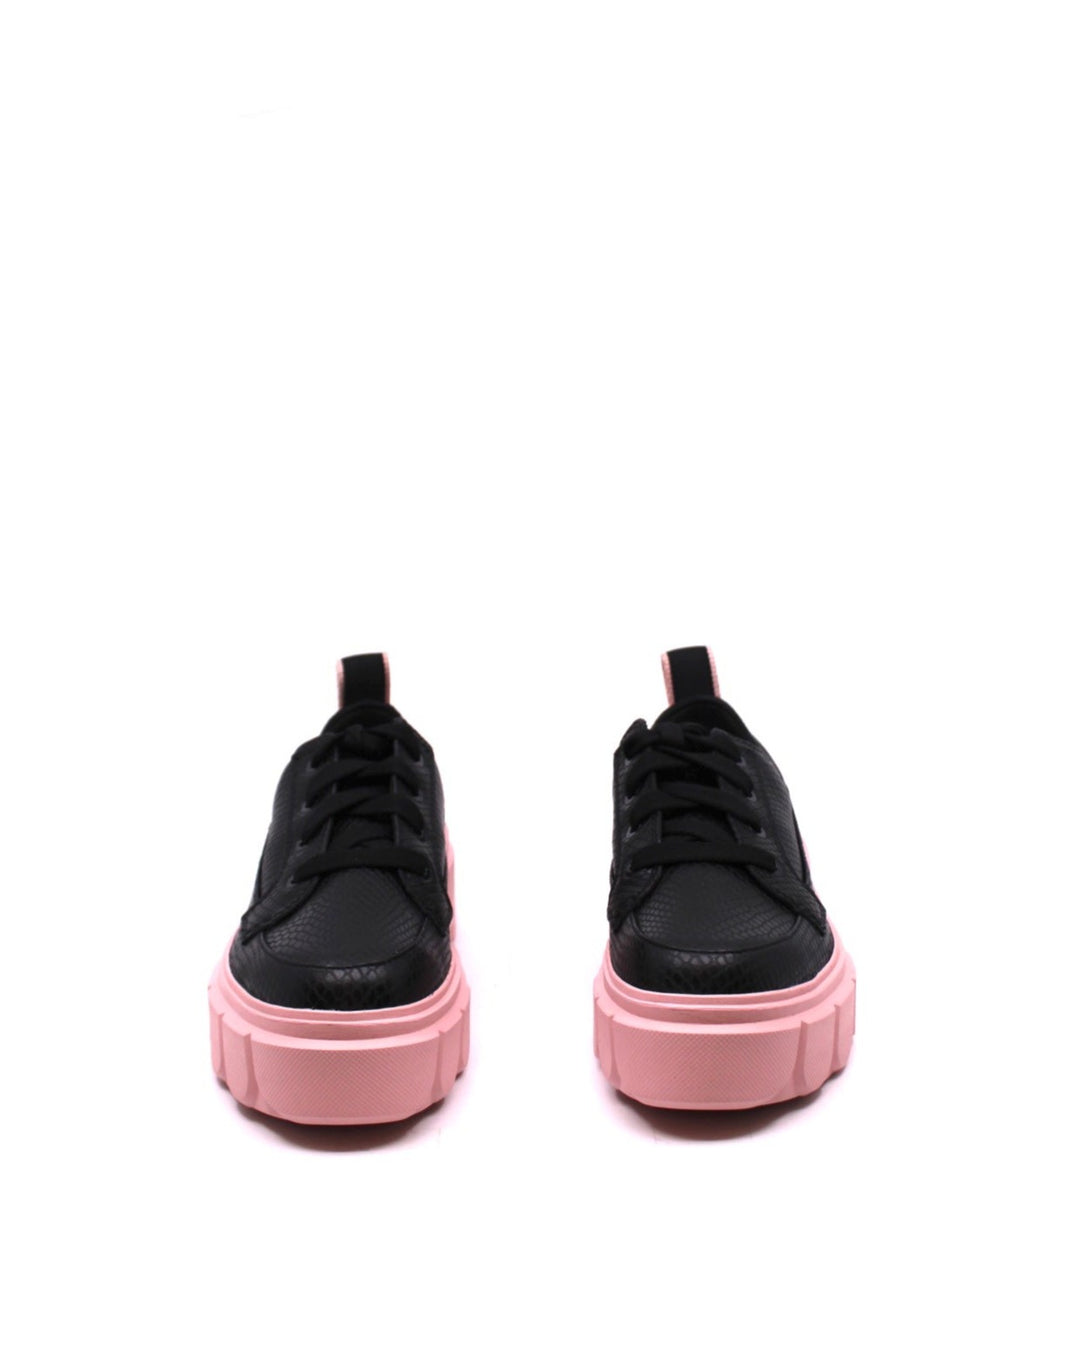 Sorel Caribou X Shoe Black/Vintage Pink - Dear Lucy